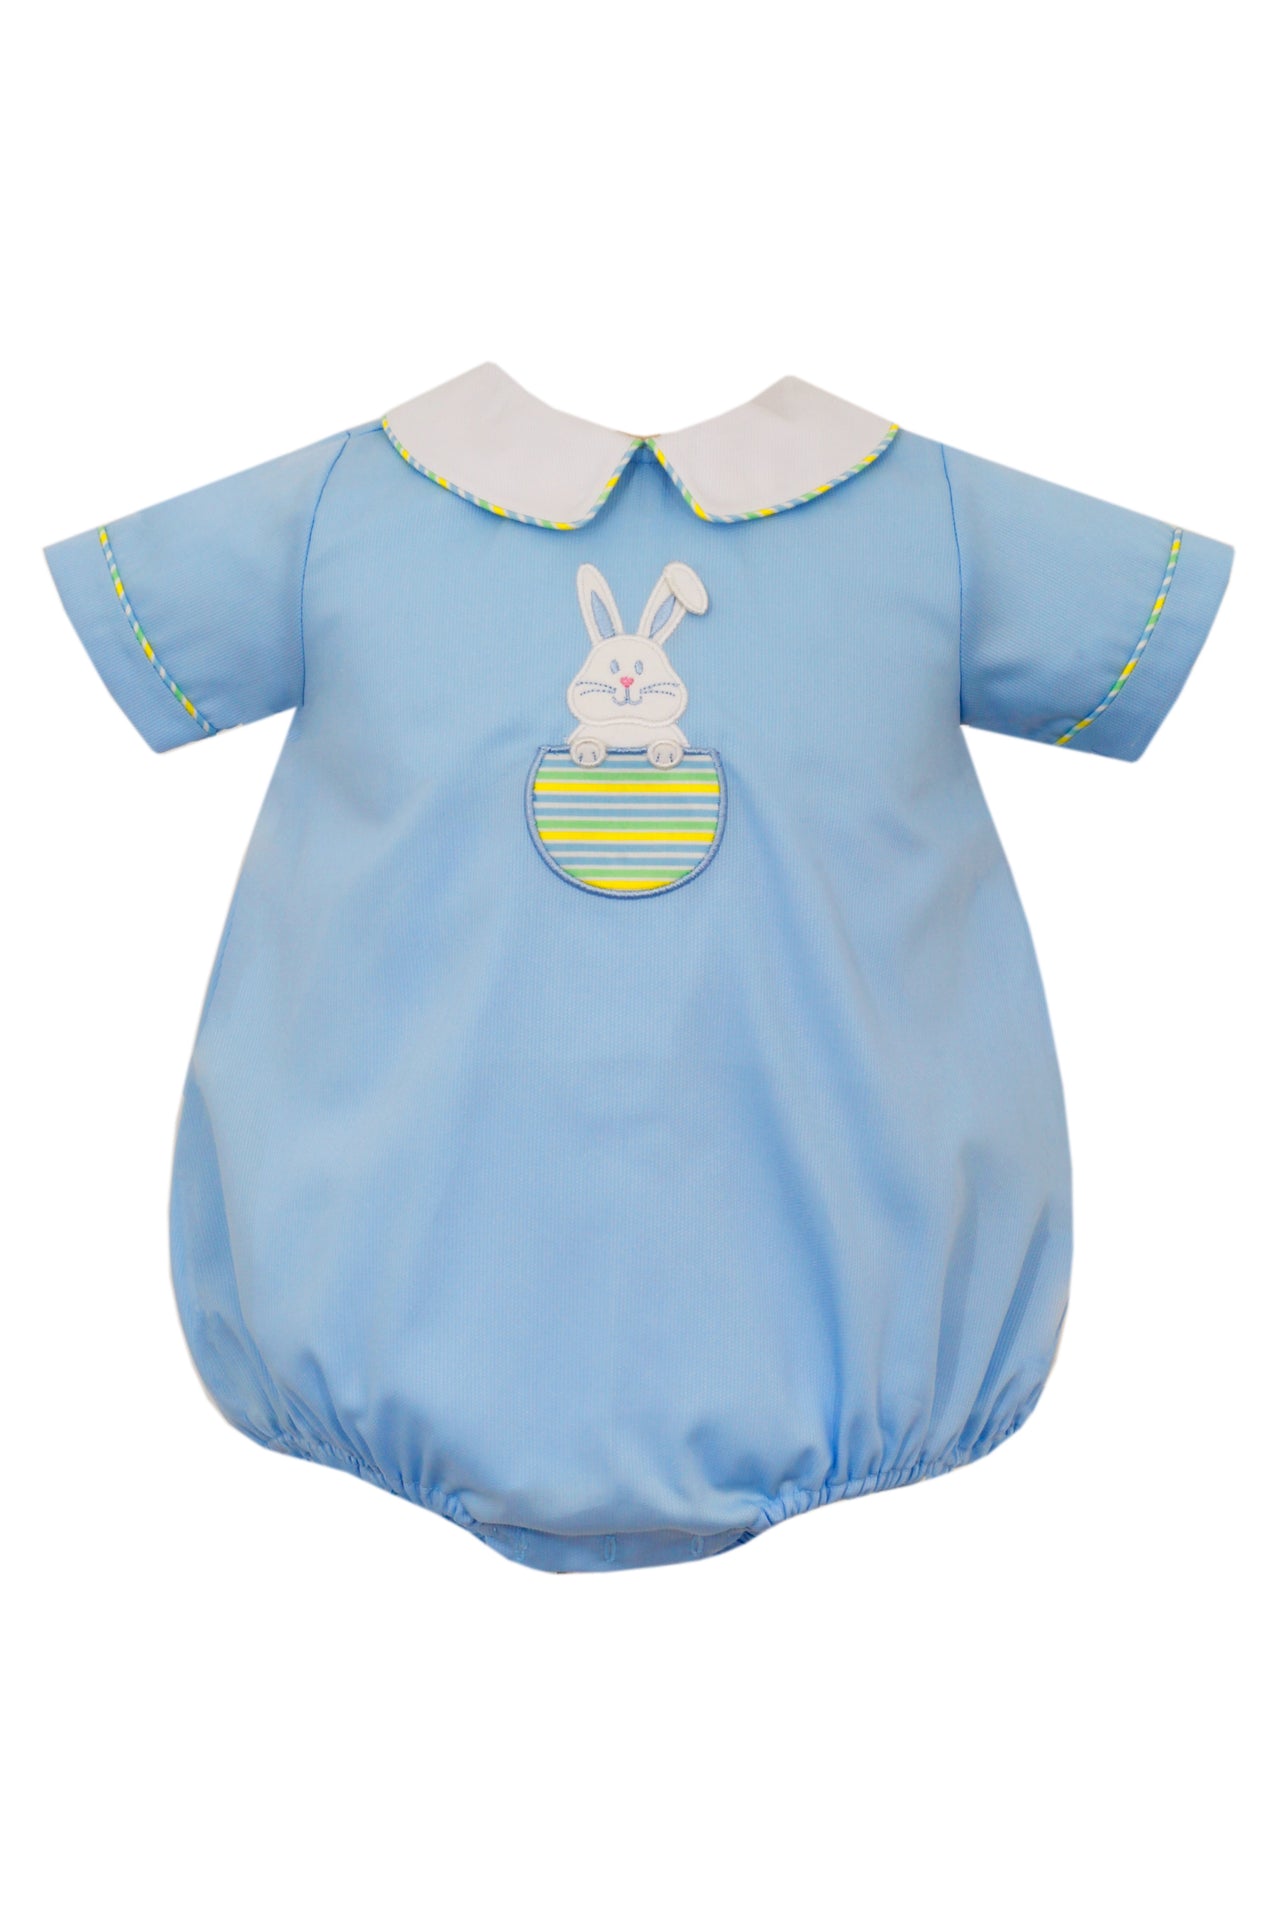 Claire & Charlie Easter egg Blue Pique Boy's Bubble W/Bunny Pocket 5000BB 5102